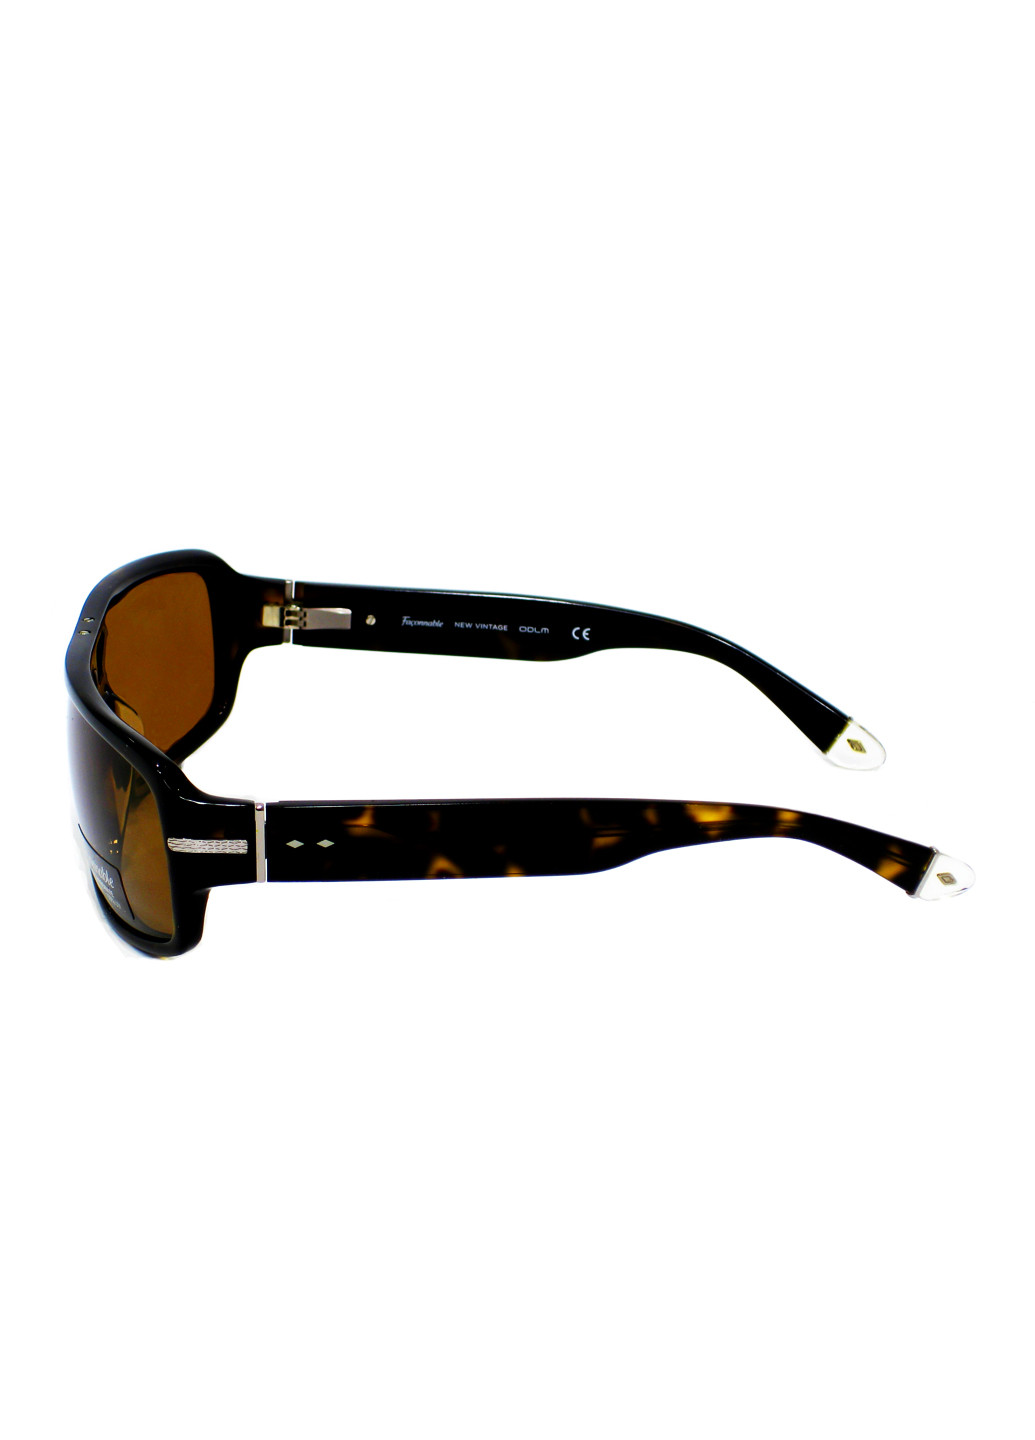 Cолнцезащітние окуляри Faconnable fv2960s 200p (205991969)